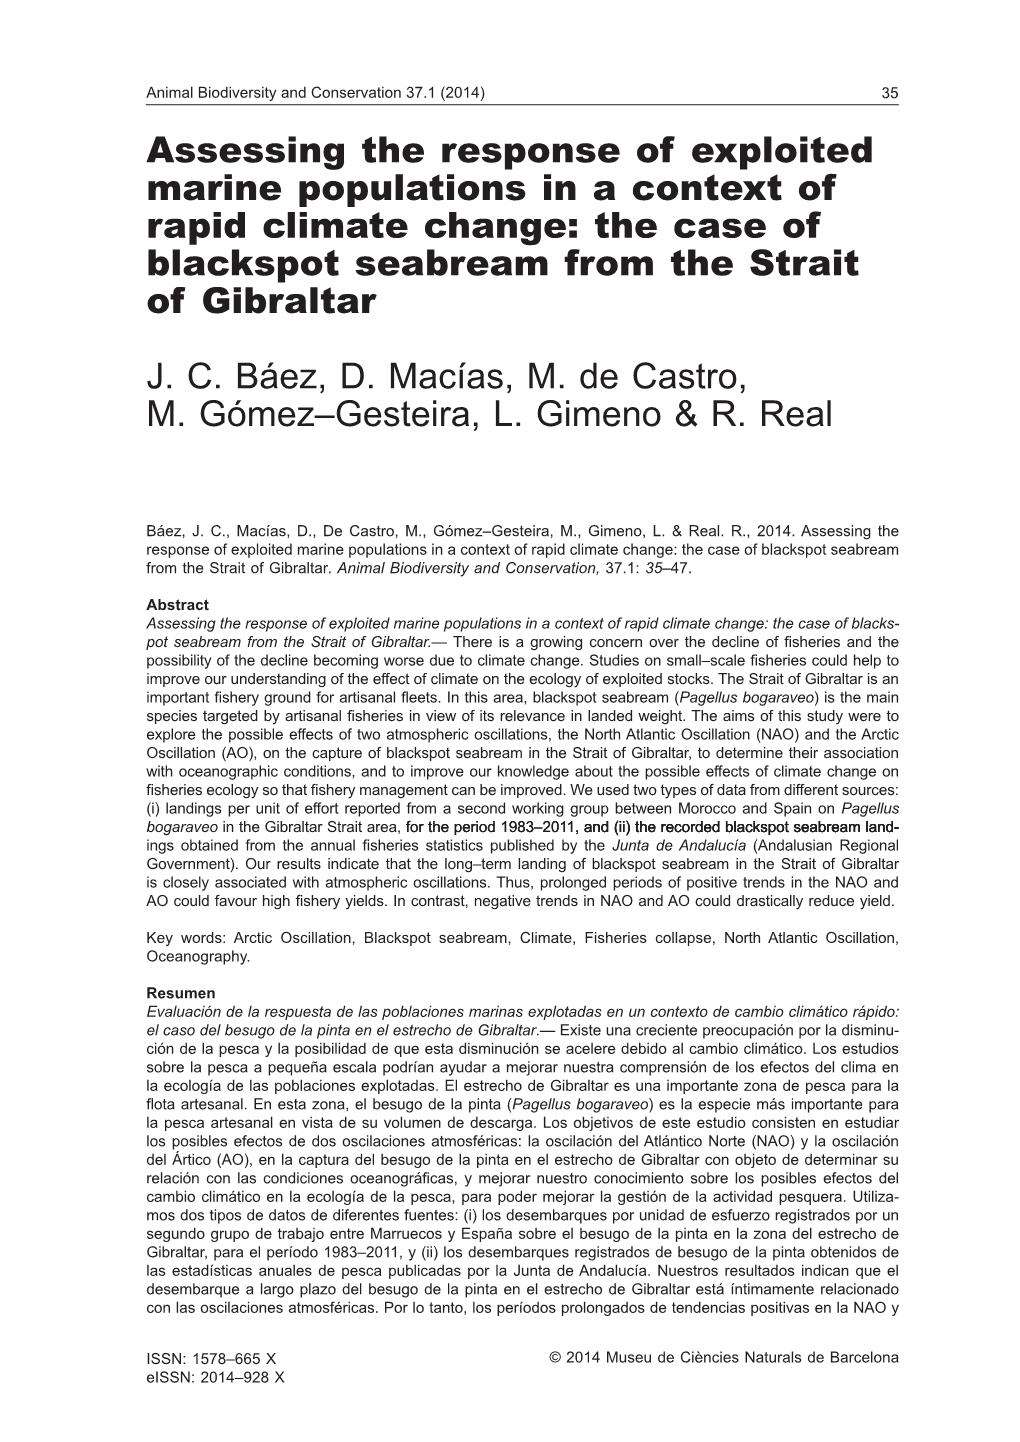 The Case of Blackspot Seabream from the Strait of Gibraltar